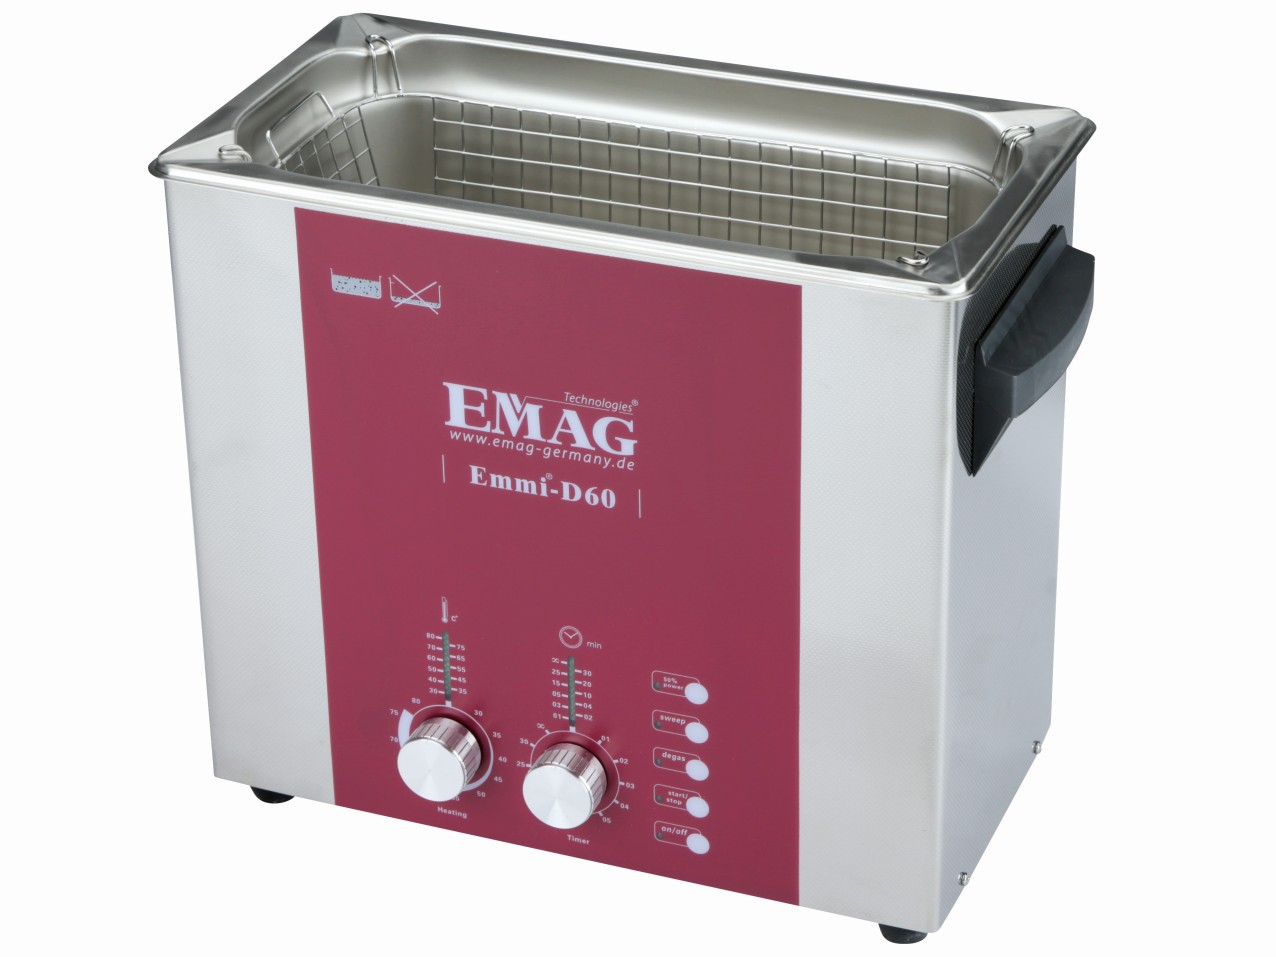 Echografie-apparaat EM D60 met afvoer en verwarming